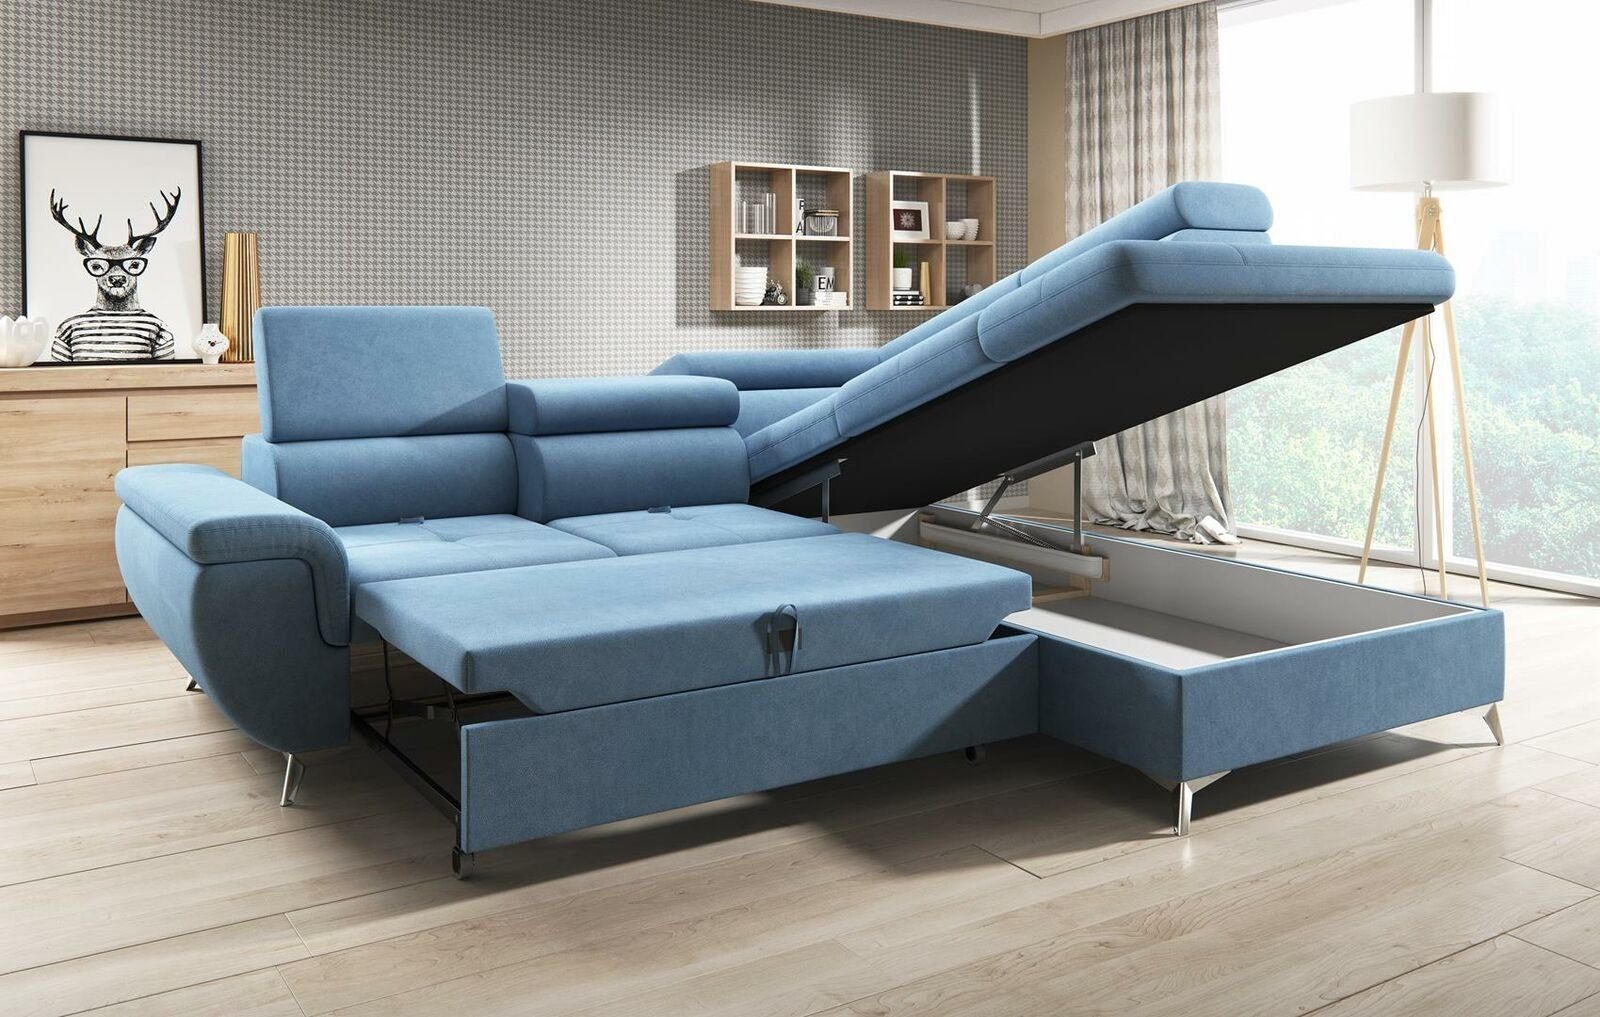 JVmoebel Ecksofa Leder Polster Sofas, Mit Couch Ecksofa L-Form Design Bettfunktion Blau Ecksofa Sofa